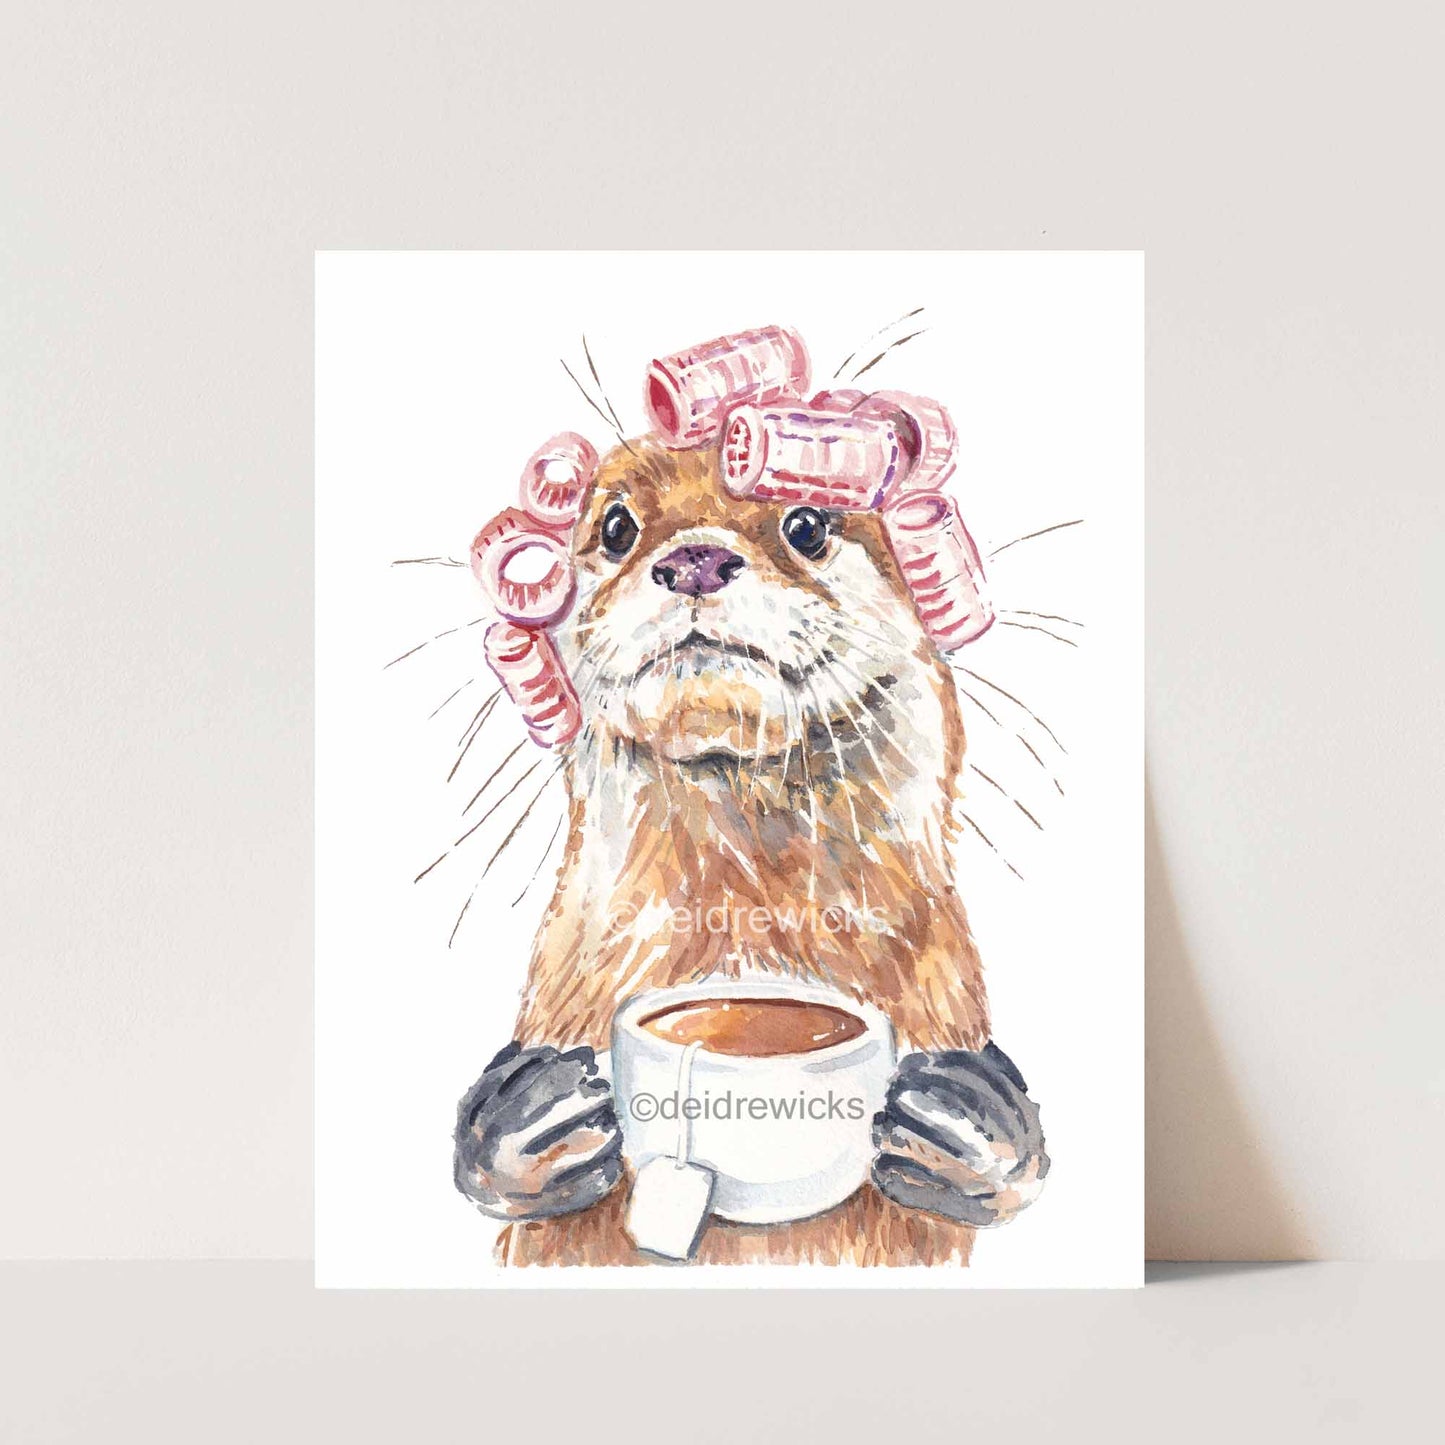 Watercolour print of an otter wearing hair curlers and drinking tea. Art Copyright Deidre Wicks